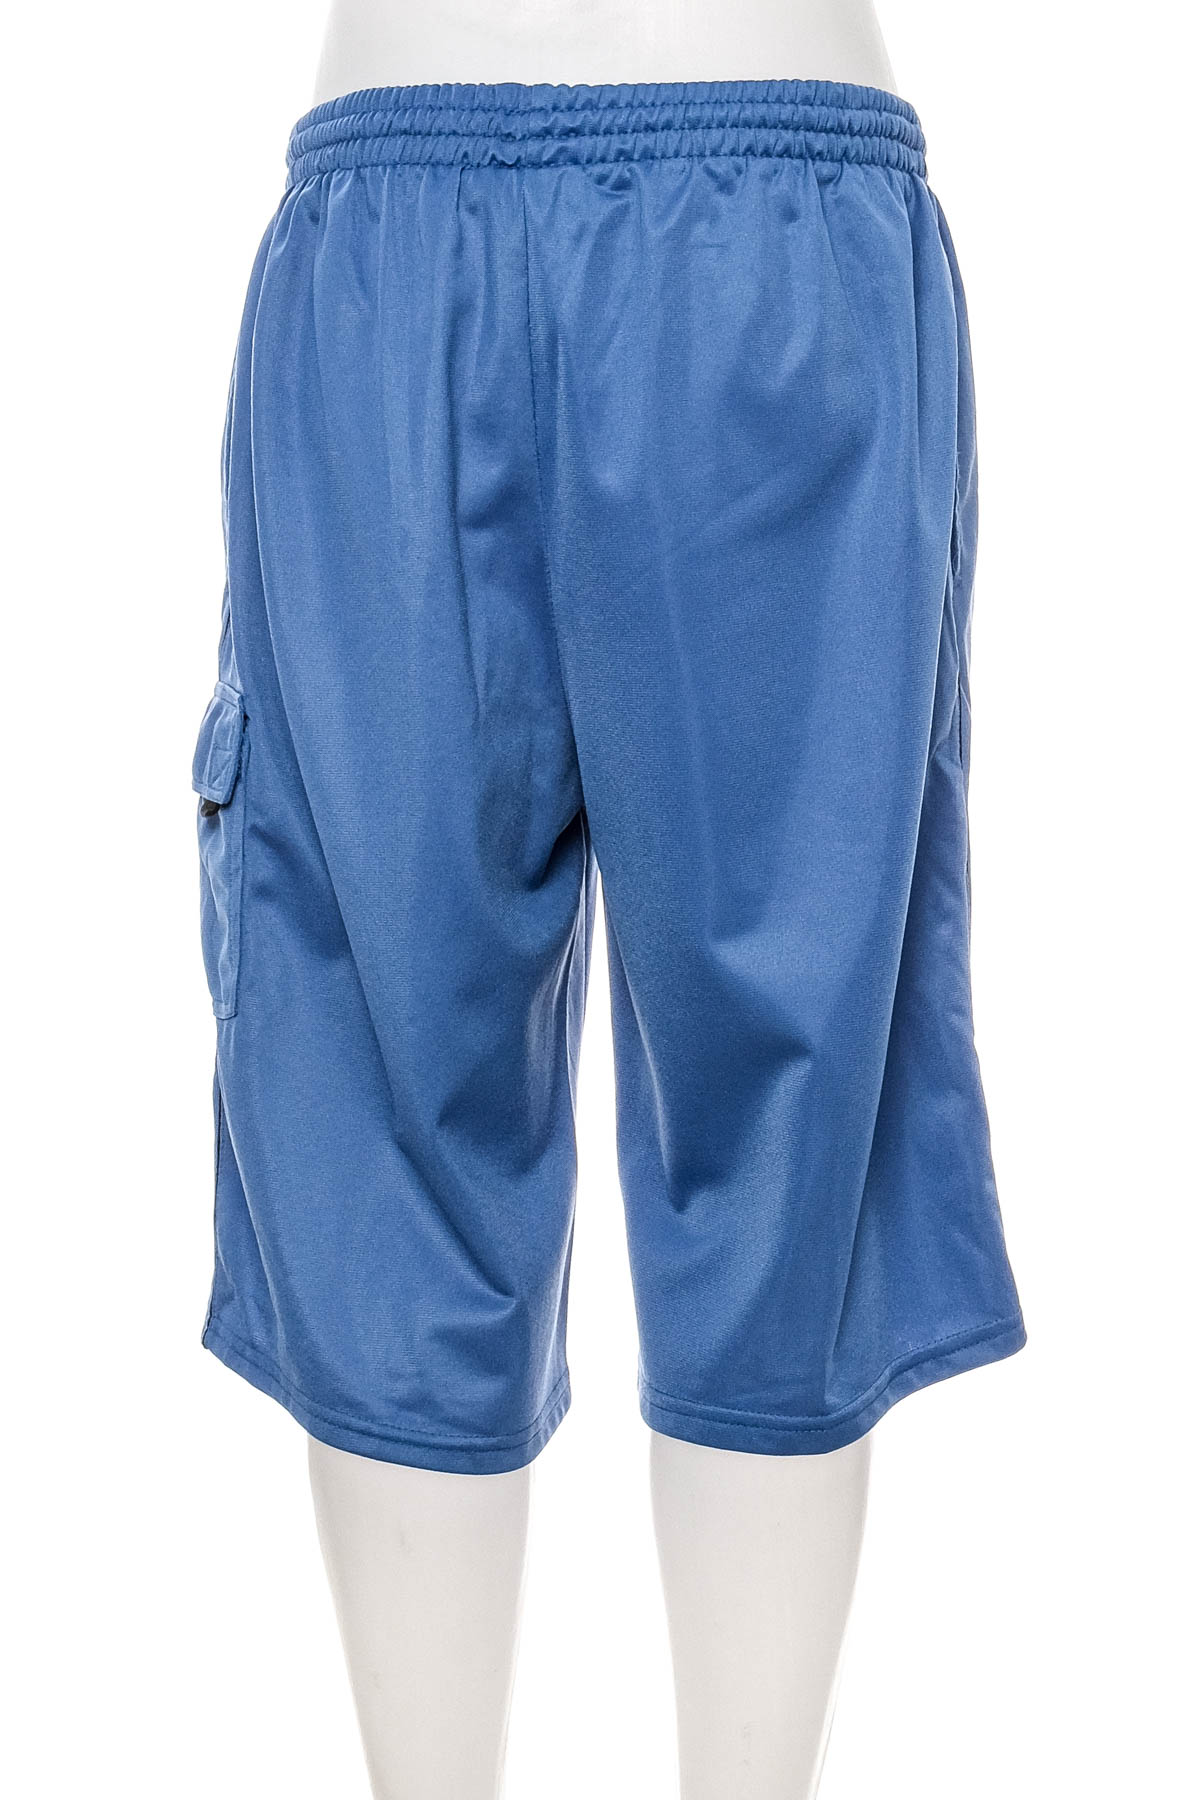 Men's shorts - Identic - 1